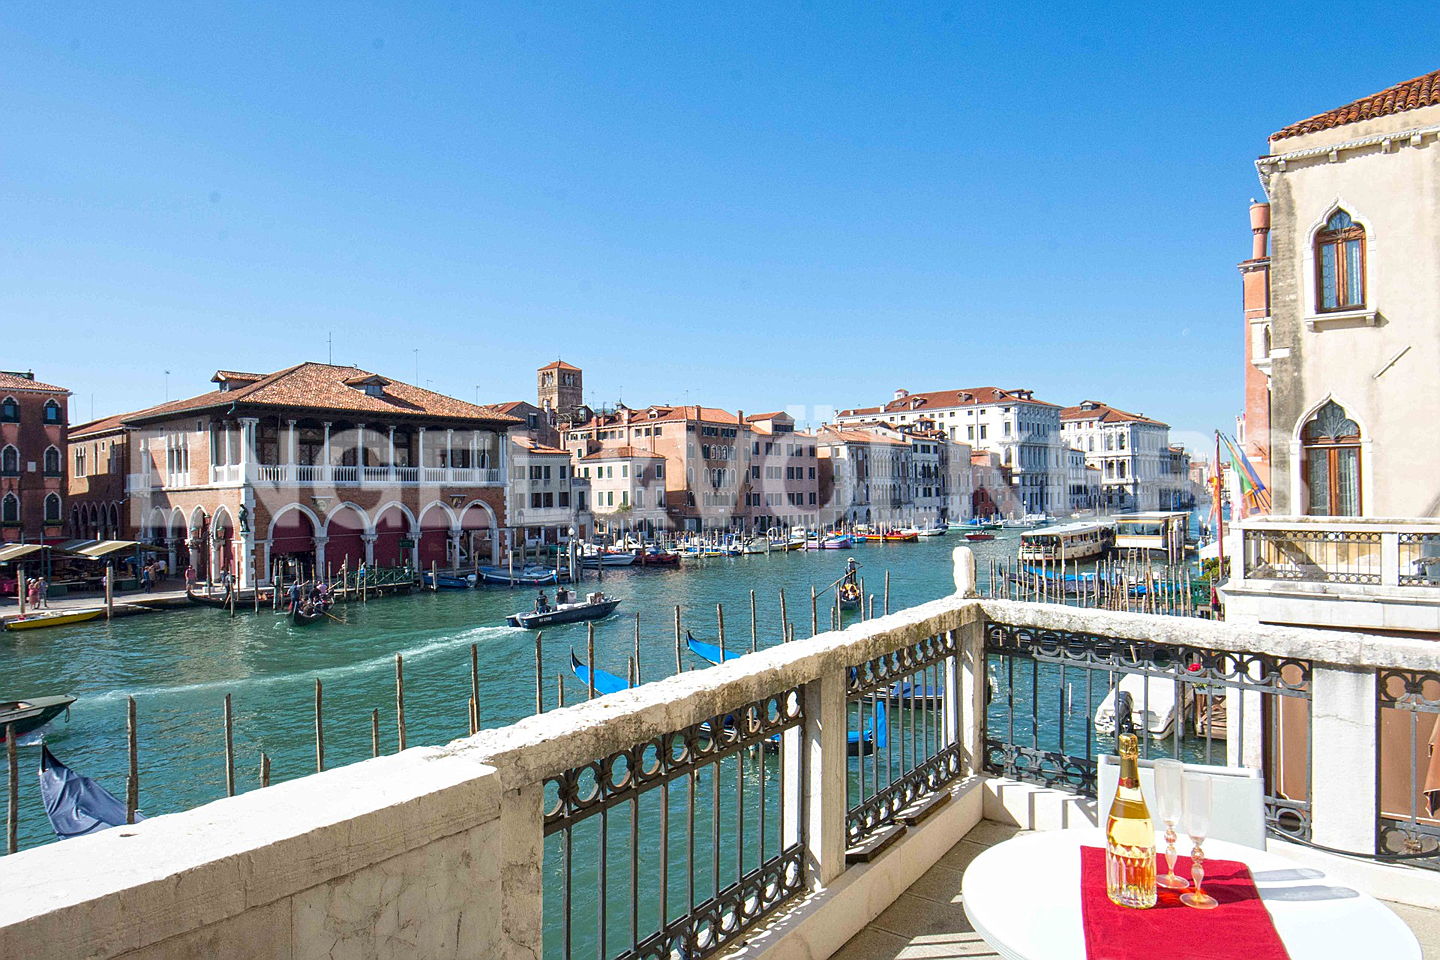  Venise
- terrazza-sul-canal-grande.jpg